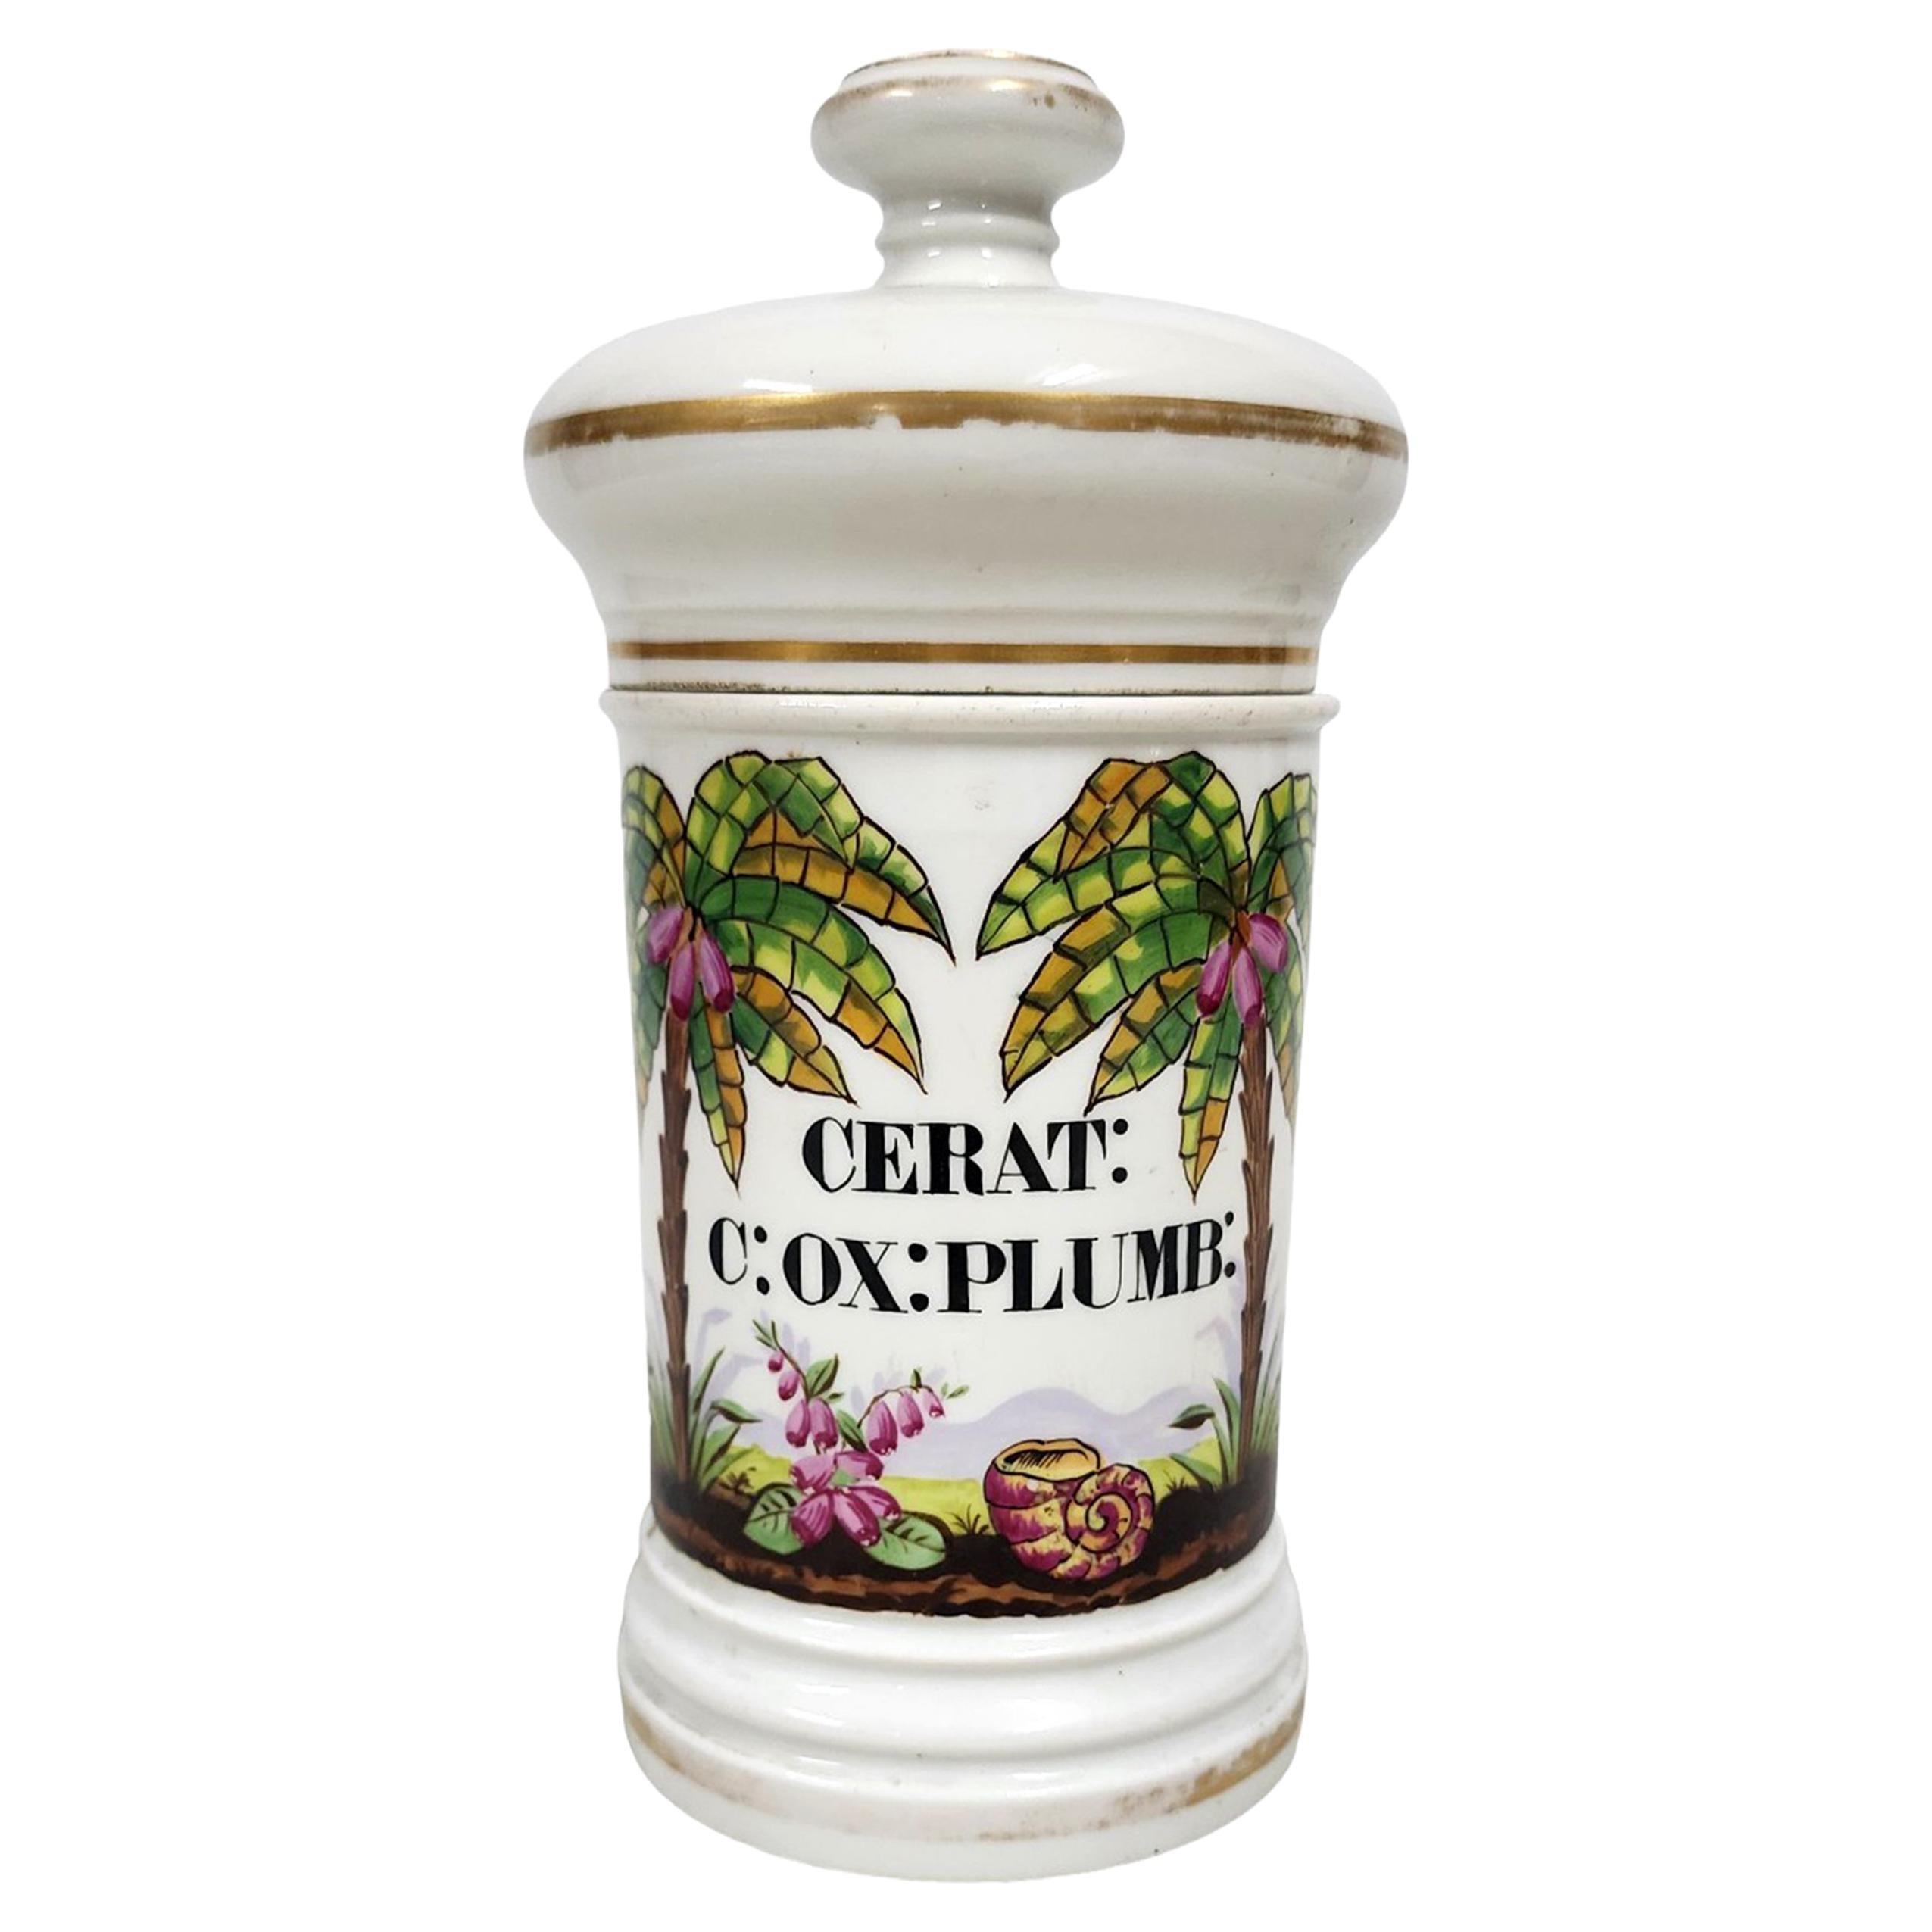 19th Century French Porcelain Apothecary/Pharmacy Jar - 'CERAT: C: OX: PLUMB:'